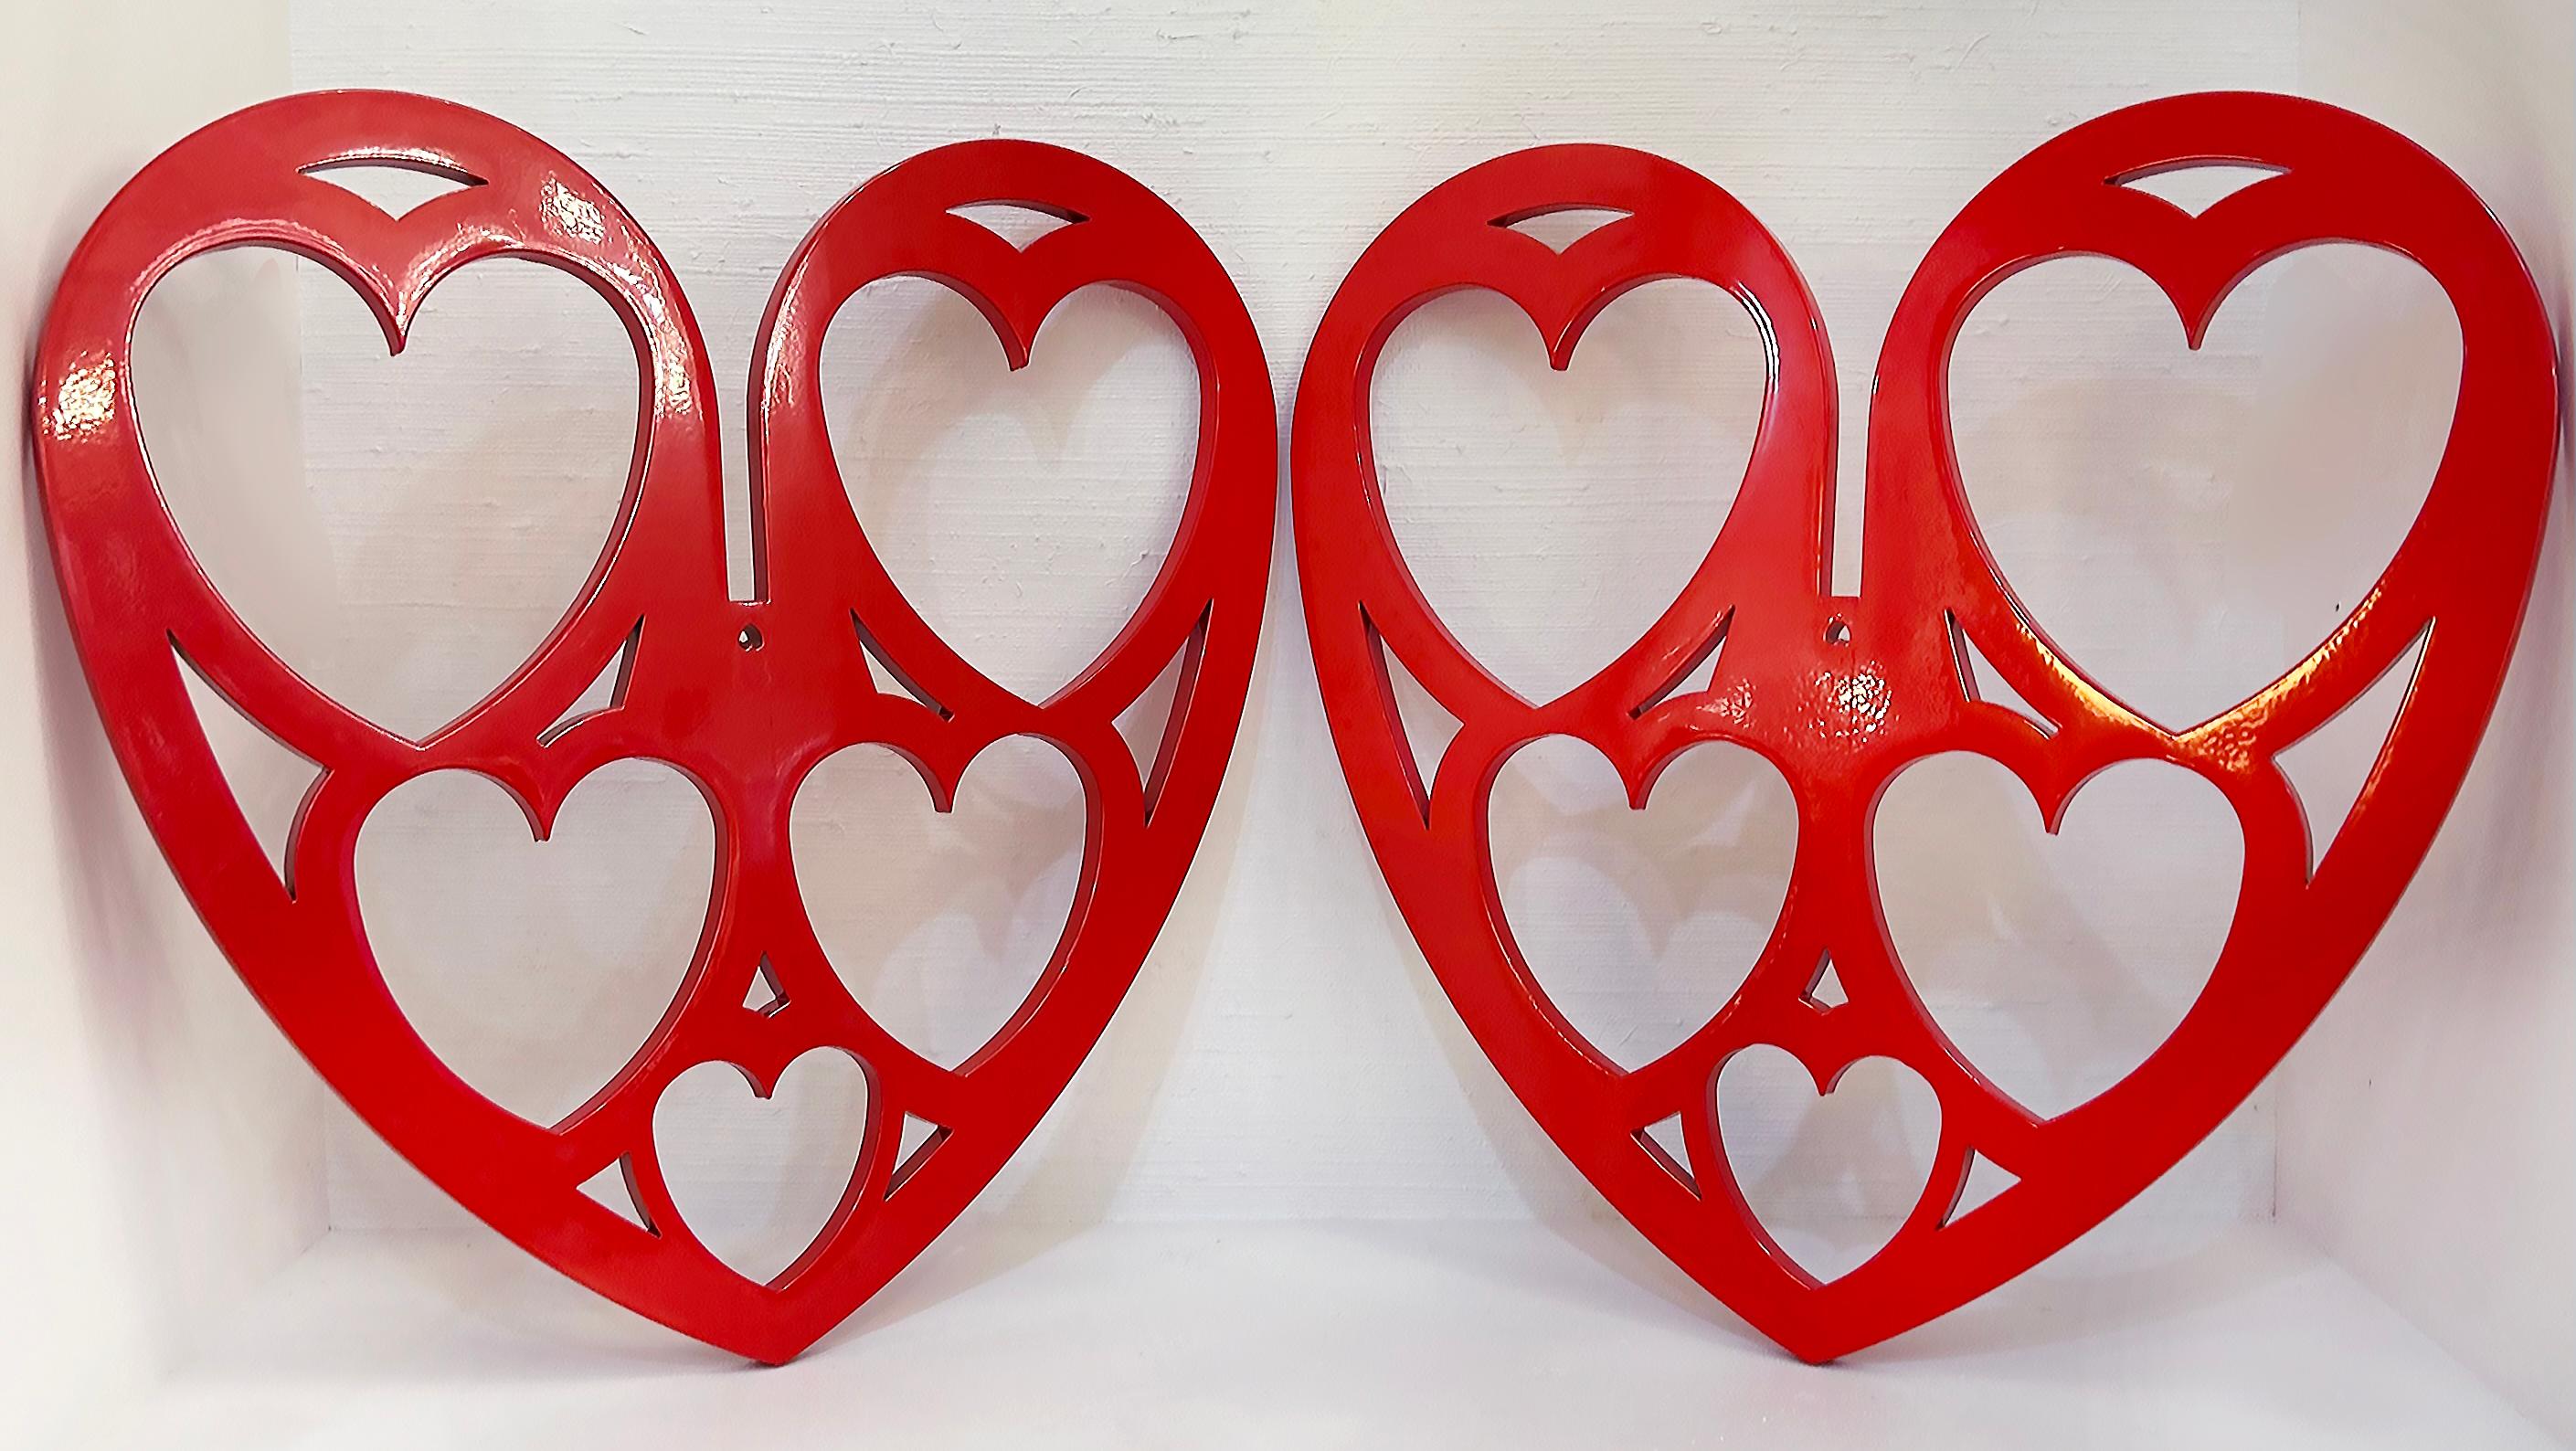 Interlocking Hearts Powder-coated Aluminum Lace Sculpture by Michael Gitter 3